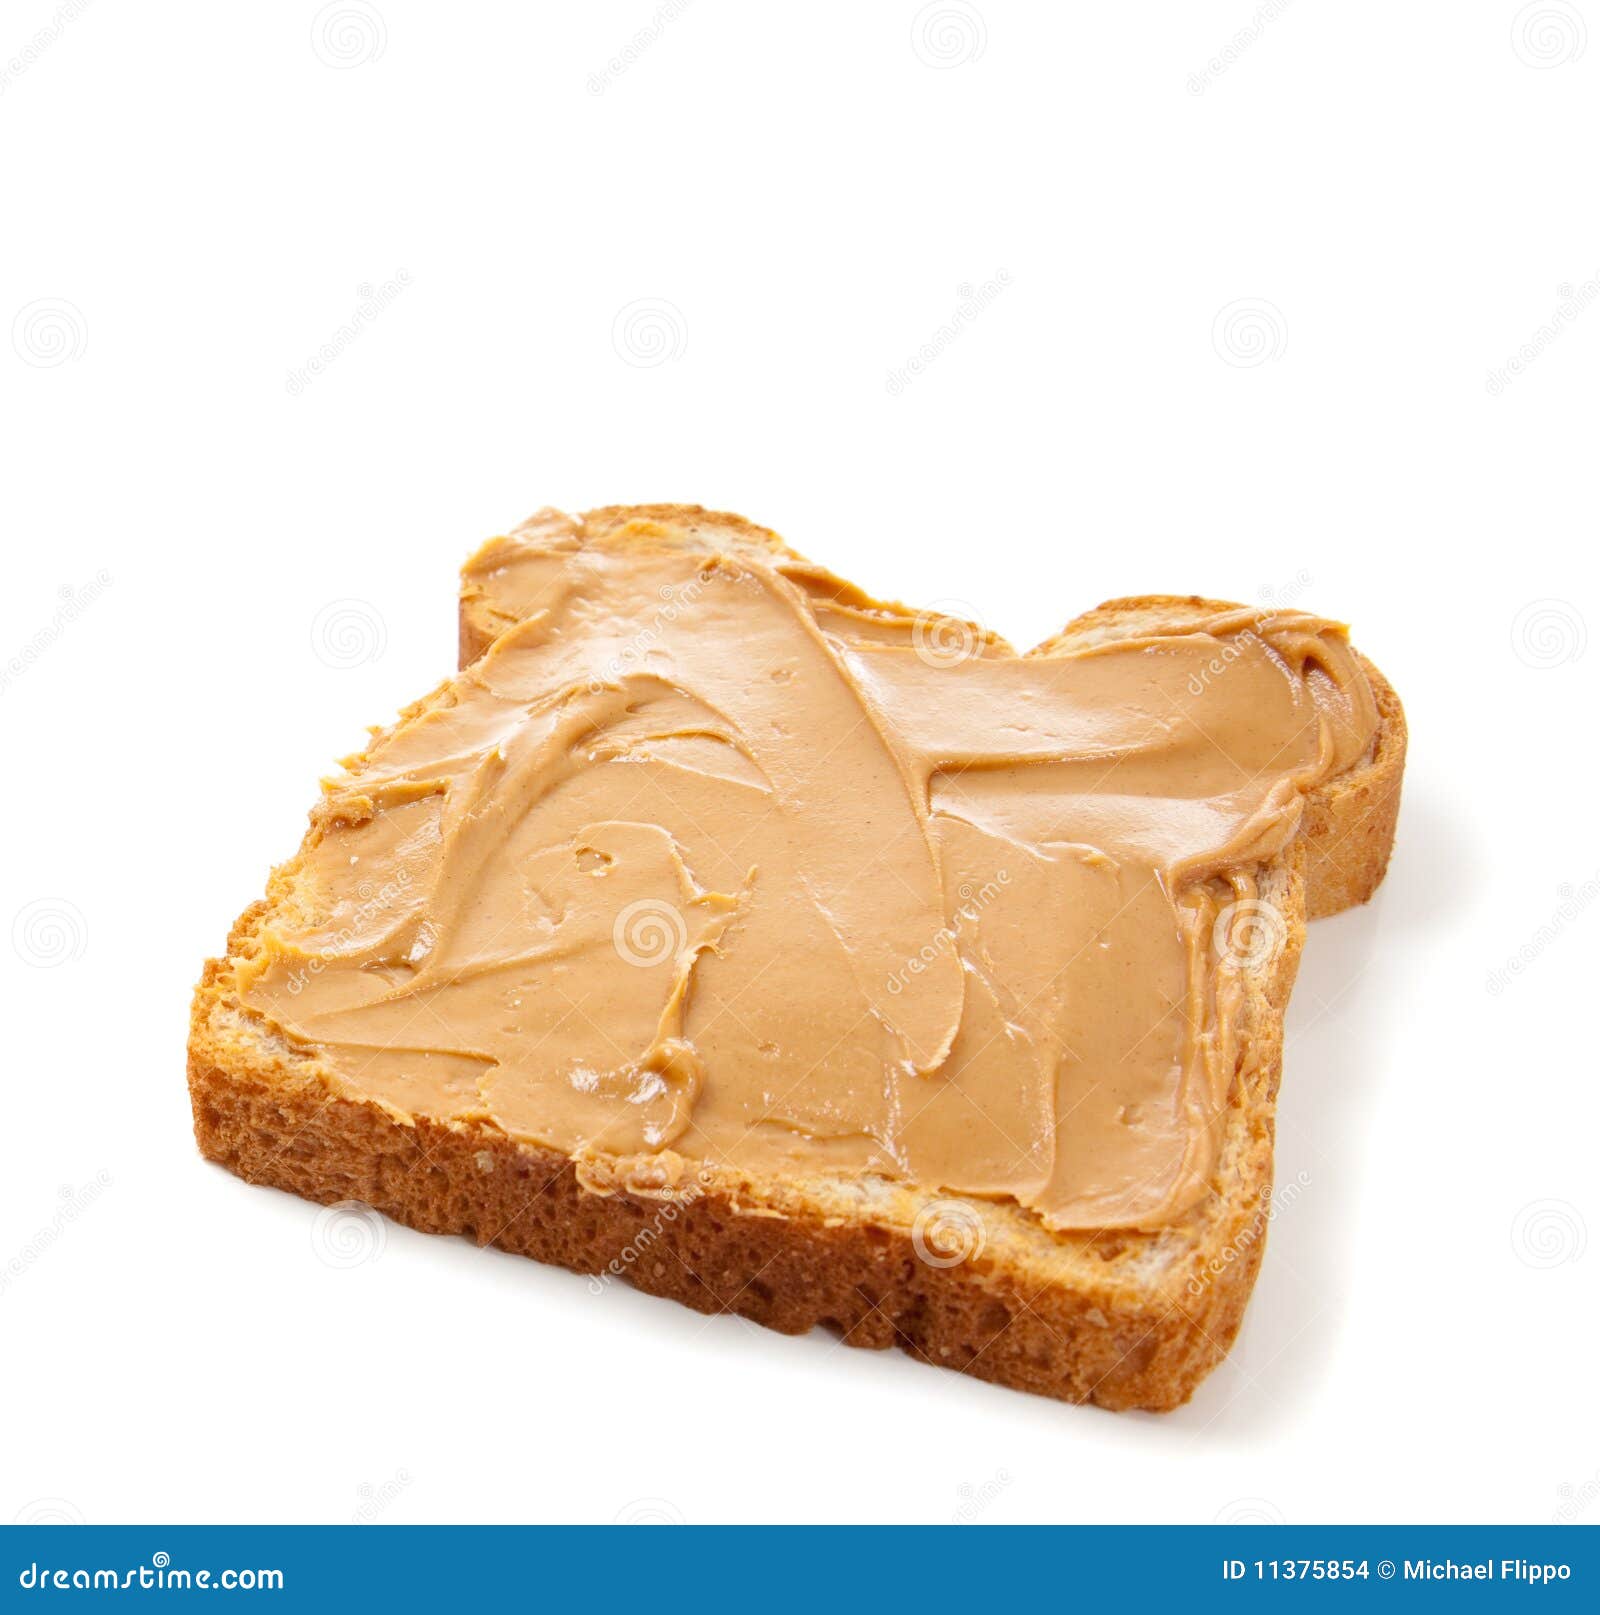 open-faced-peanut-butter-sandwich-113758